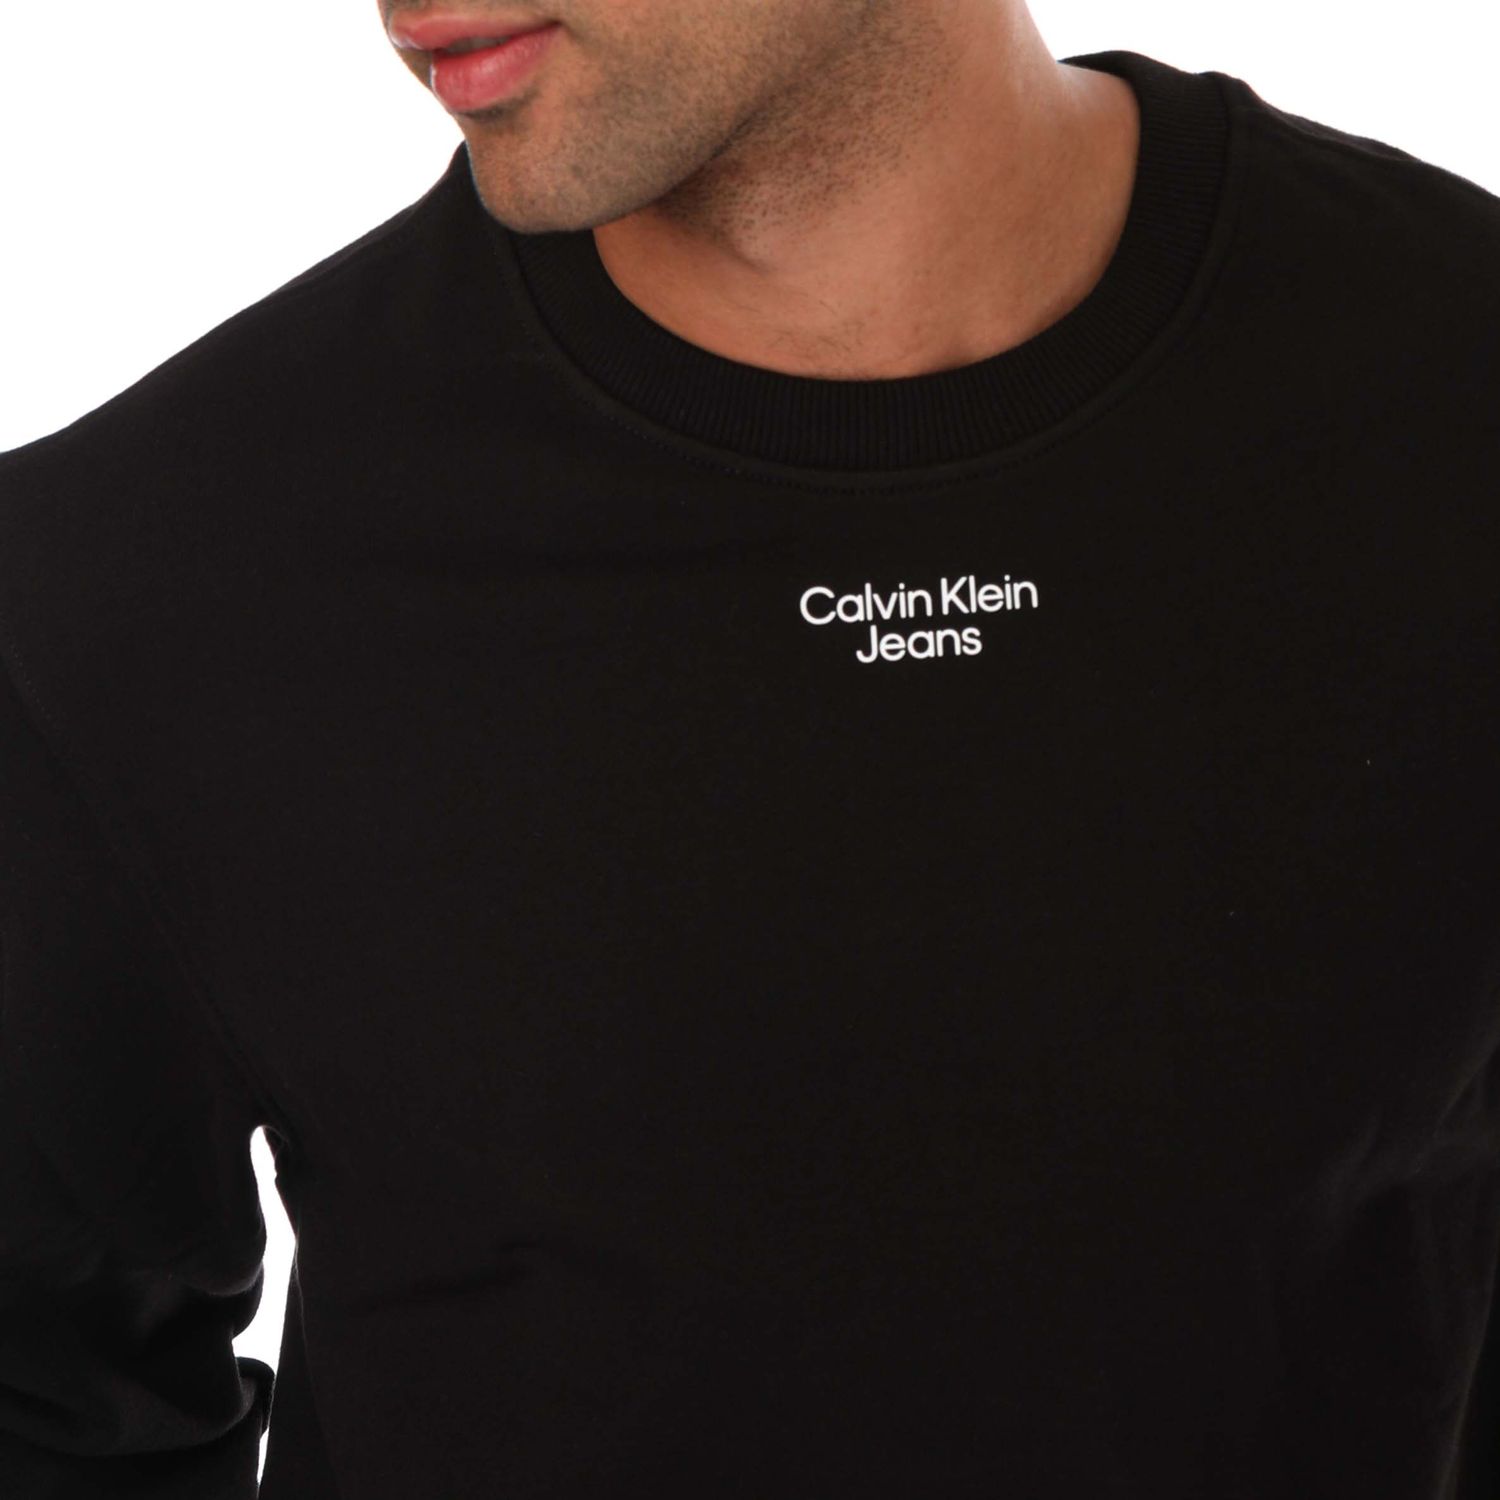 CALVIN KLEIN JEANS - Men's relaxed logo sweatshirt 